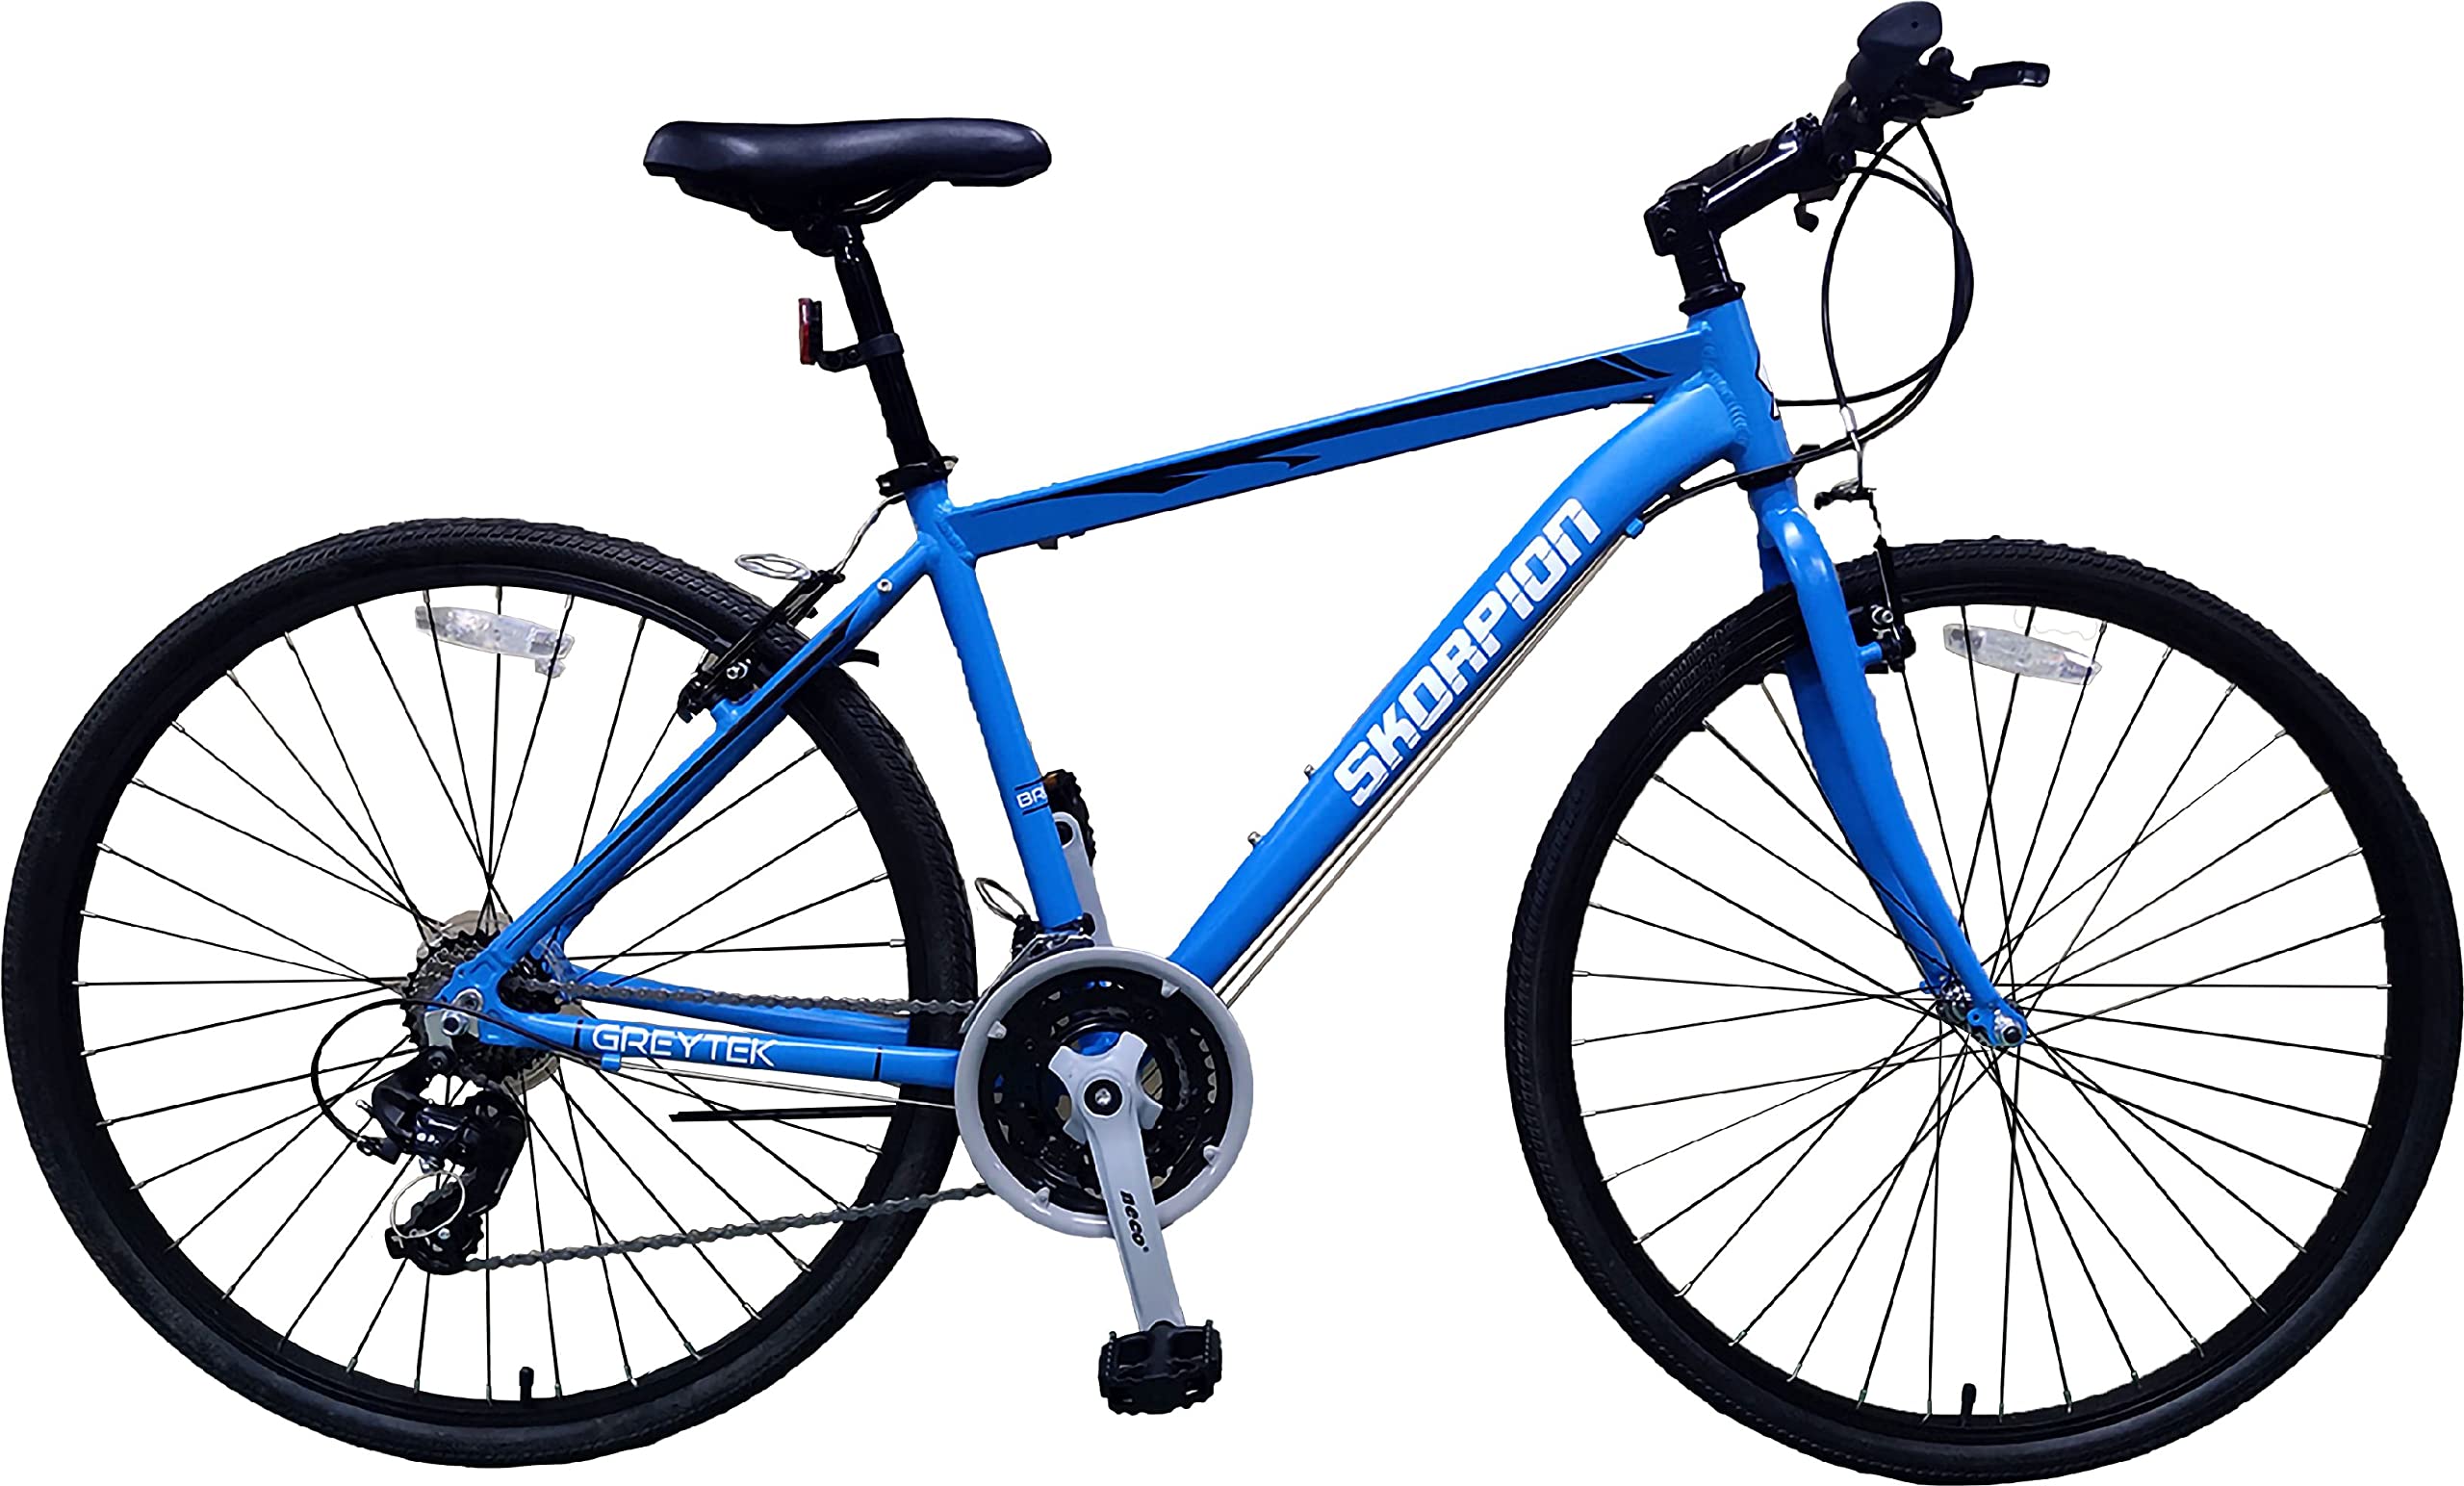 GTB751MB Skorpion 700C X 51cm Blue Large Bruno Gents Hybrid Bicycle